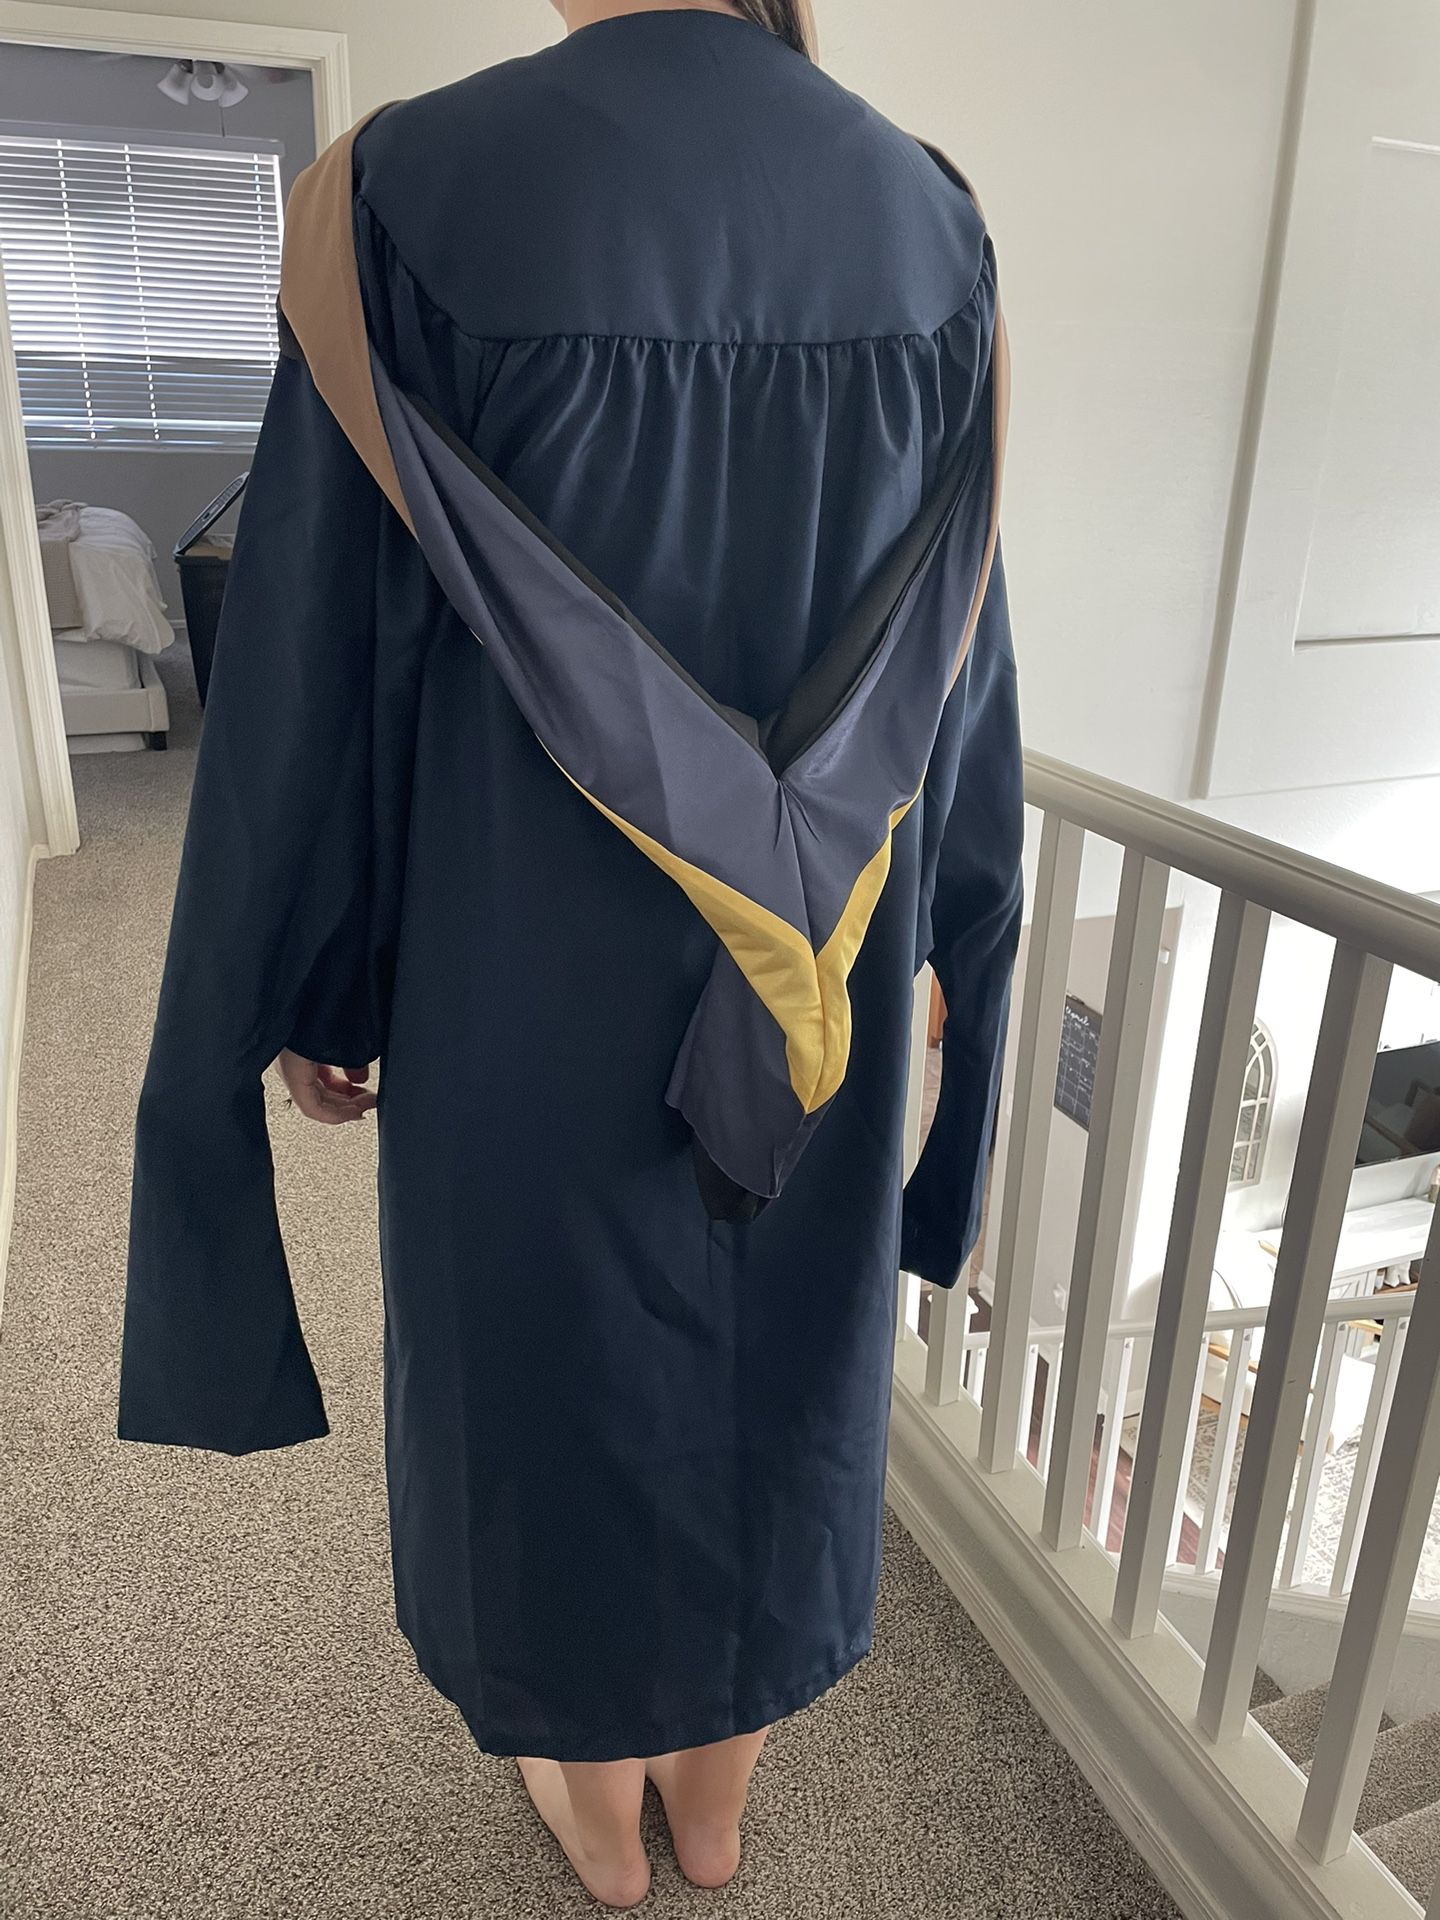 Northern Arizona University Gown And Masters Hood 